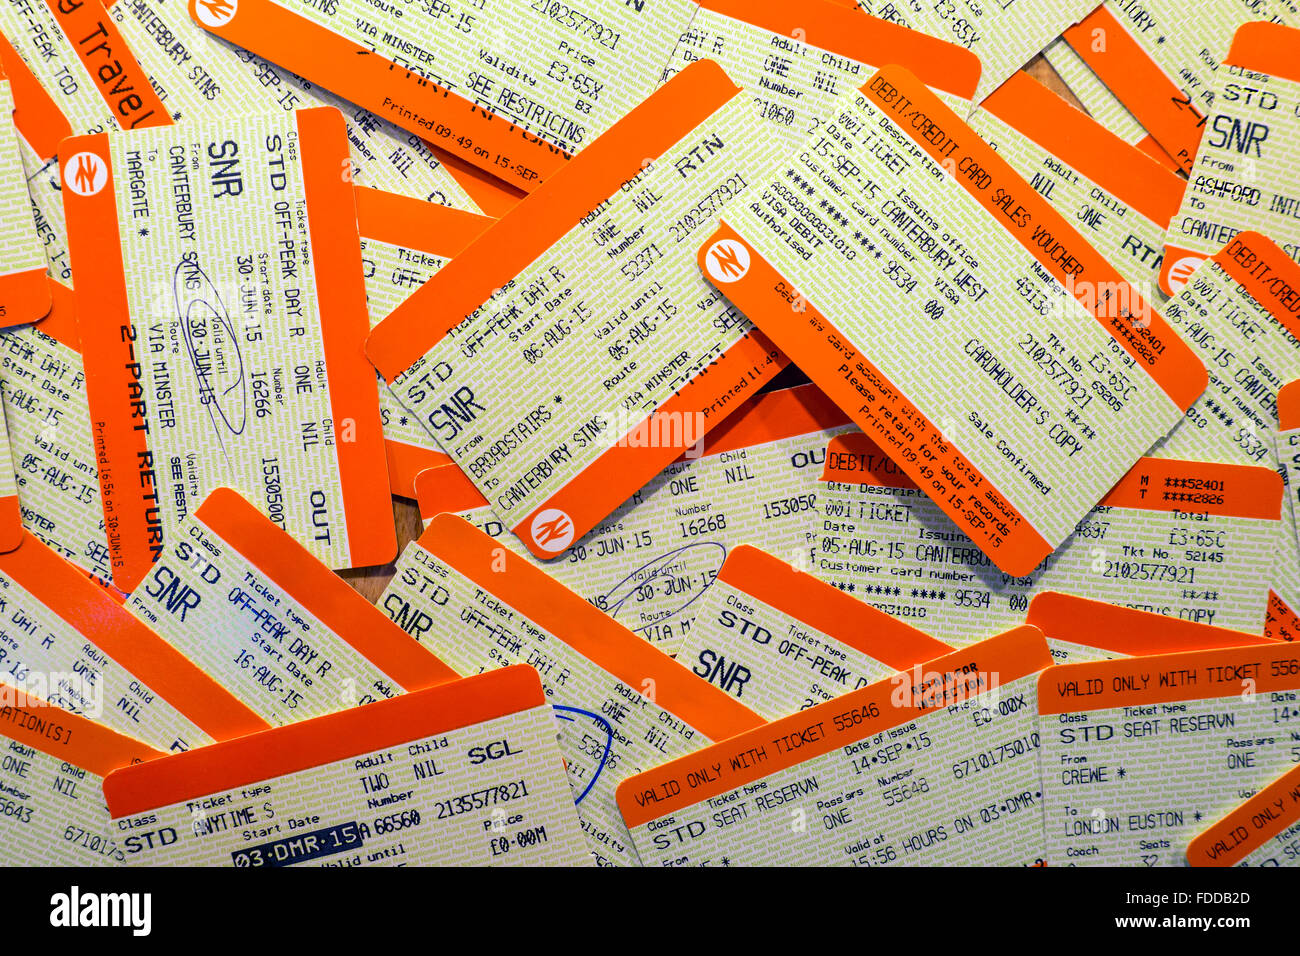 Senior Rail Card Rail Tickets Rail Travel Off Peak Travel Stock Photo